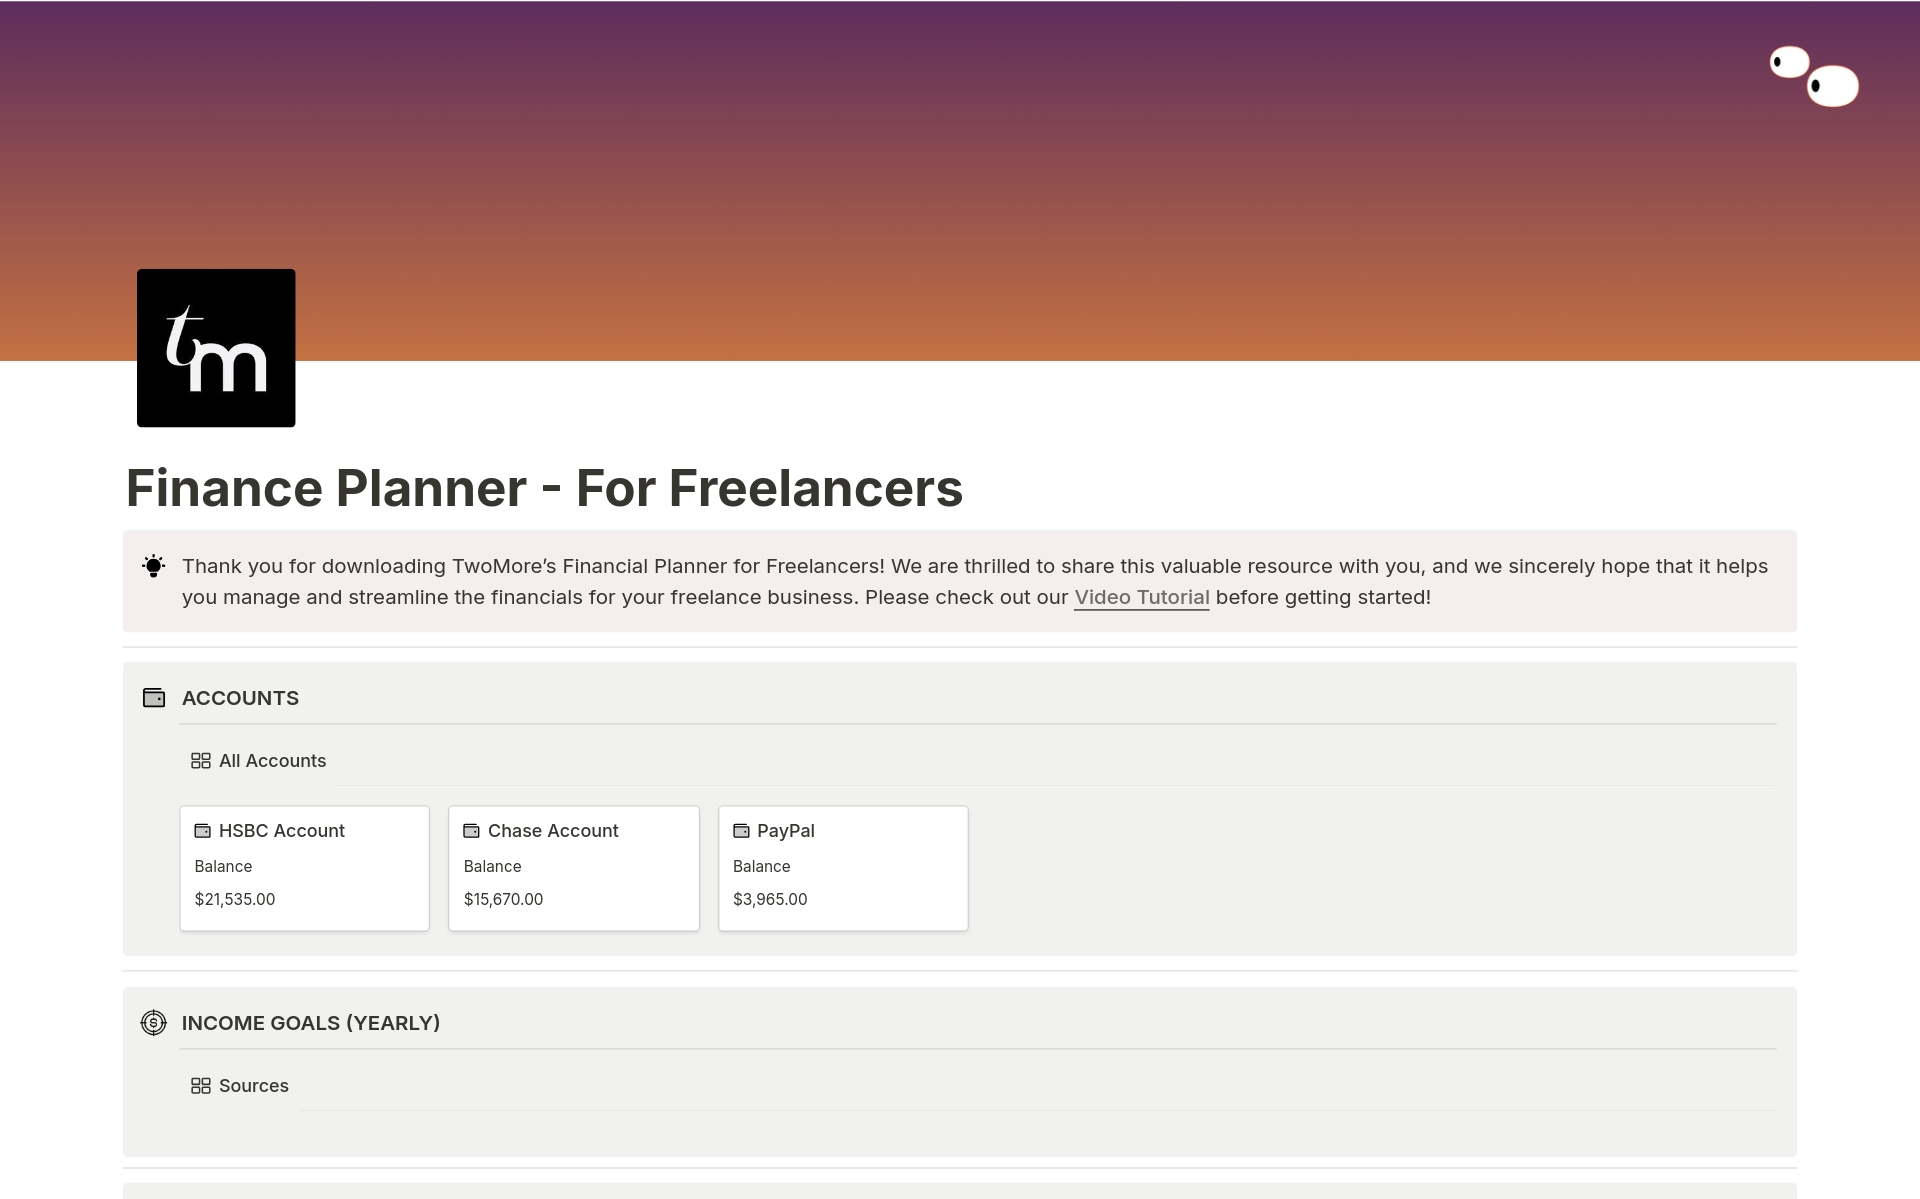 Finance Planner - For Freelancers님의 템플릿 미리보기